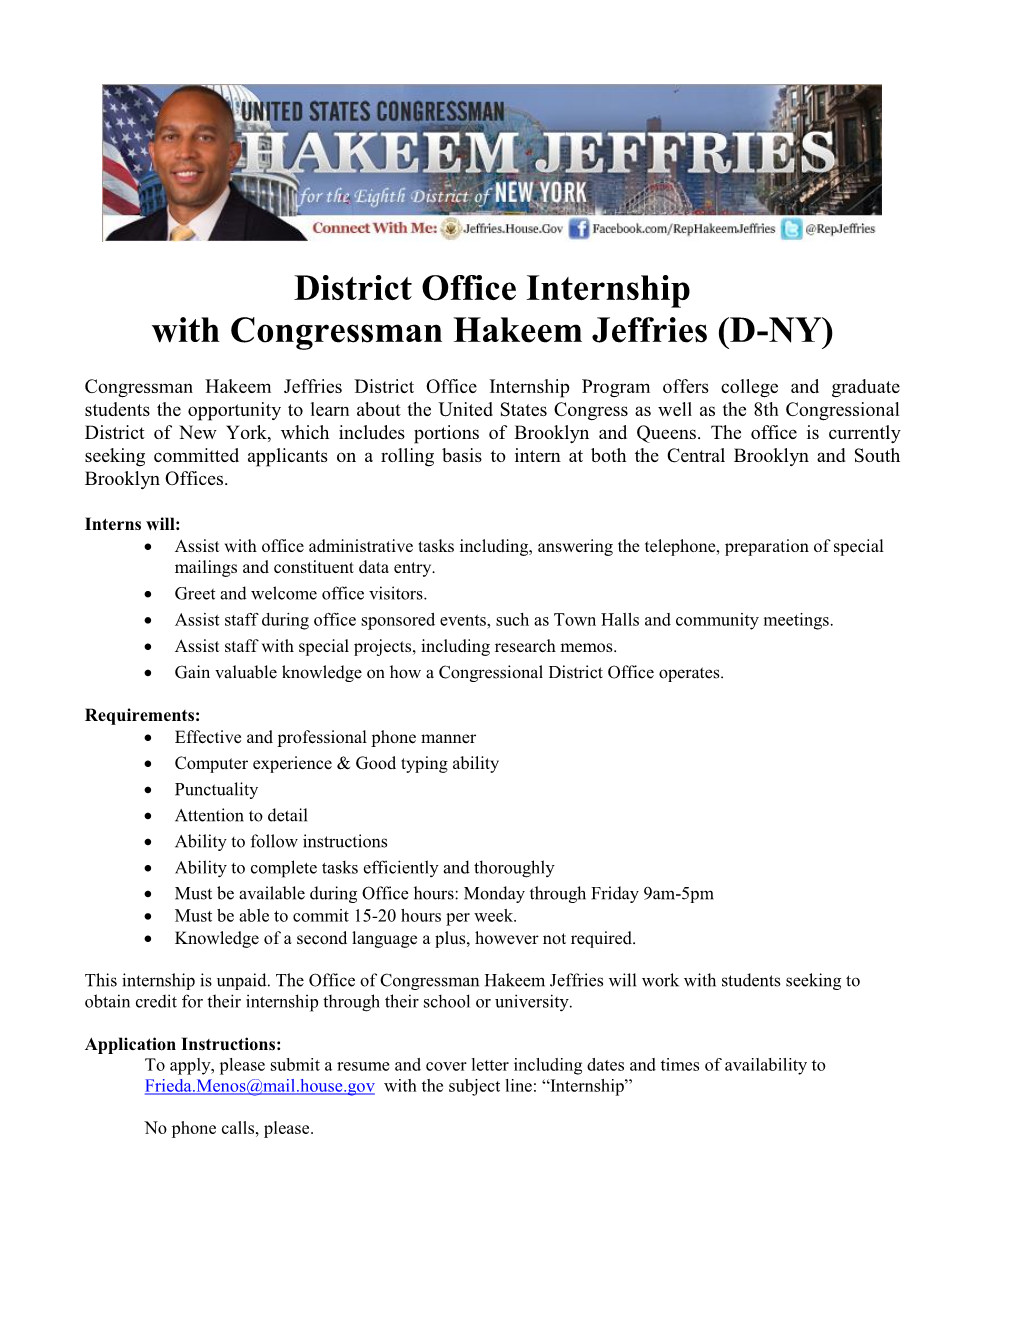 District Office Internship with Congressman Hakeem Jeffries (D-NY)